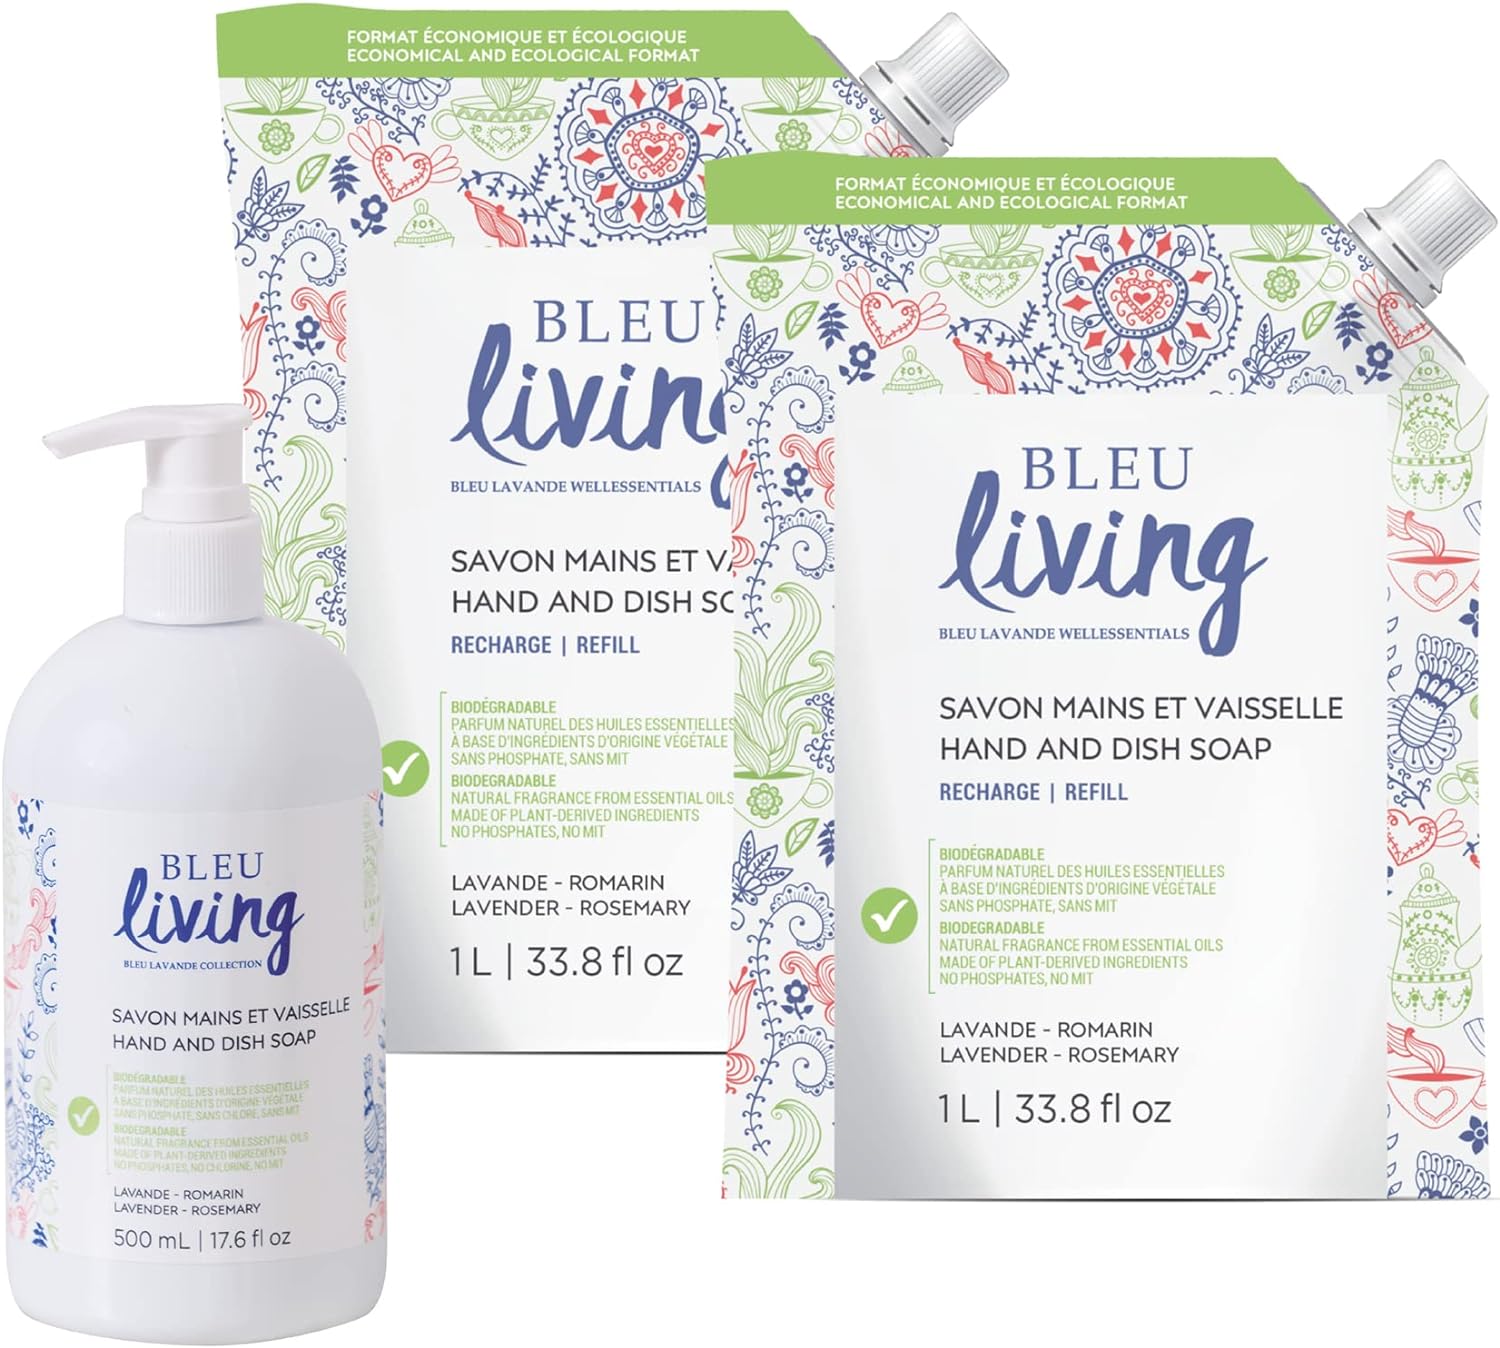 Bleu Lavande - 2 in 1 - Liquid Hand Soap & Dish Soap Refill - Eco friendly - Lavender Essential Oil - Biodegradable - Cruelty free - No artificial fragrances - 1 x 17.6 fl oz and 2 x 33.8 fl oz